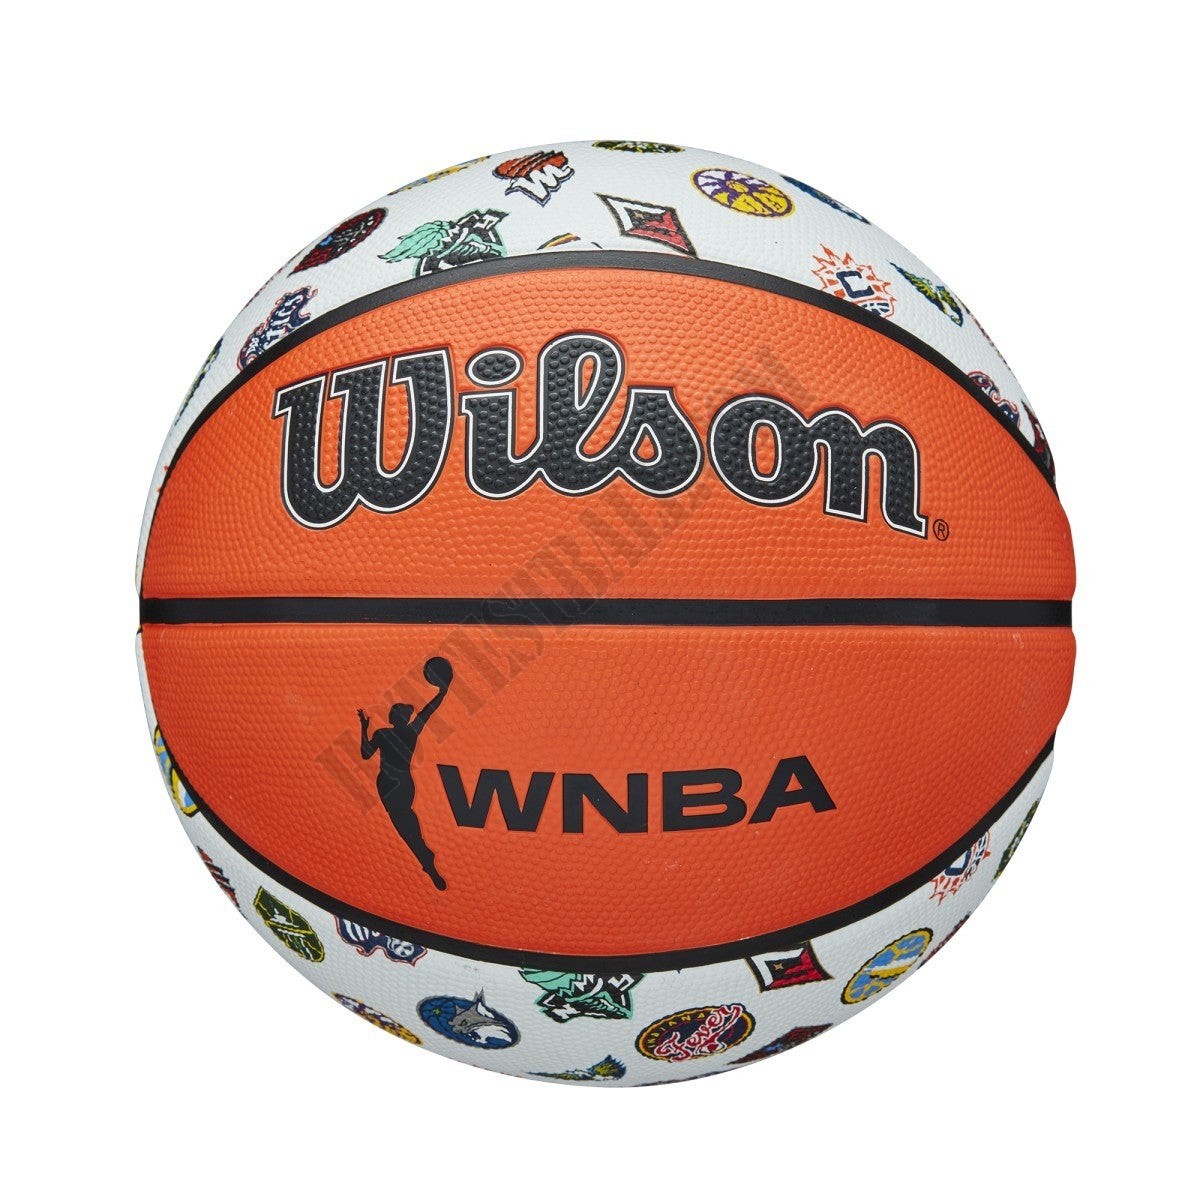 WNBA All Team Basketball - Wilson Discount Store - WNBA All Team Basketball - Wilson Discount Store